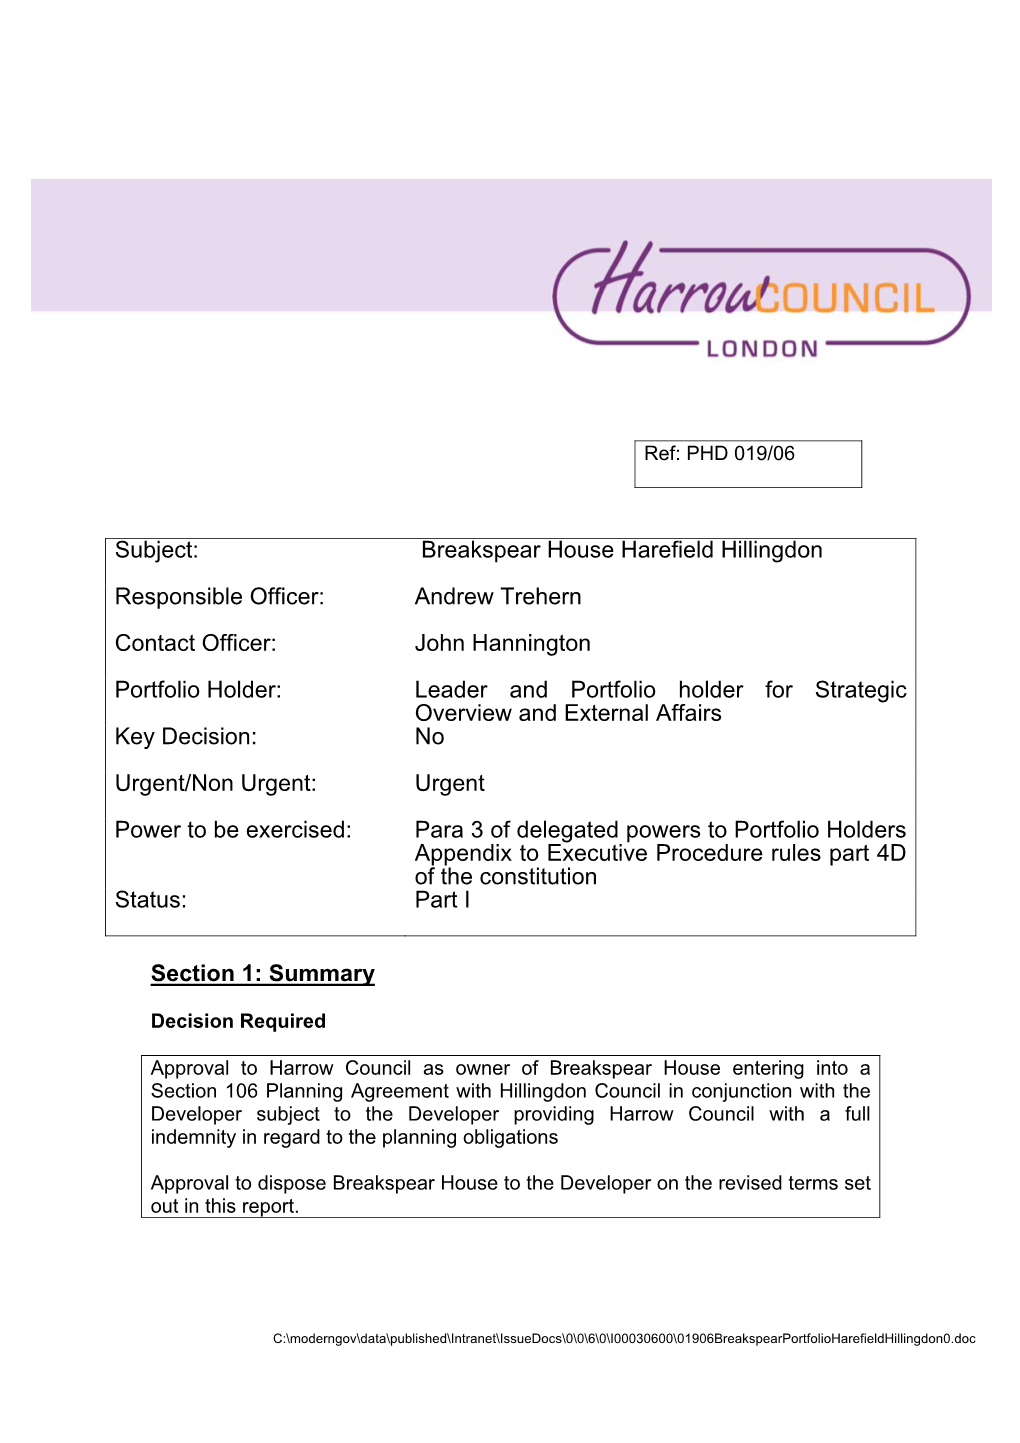 Subject: Breakspear House Harefield Hillingdon Responsible Officer